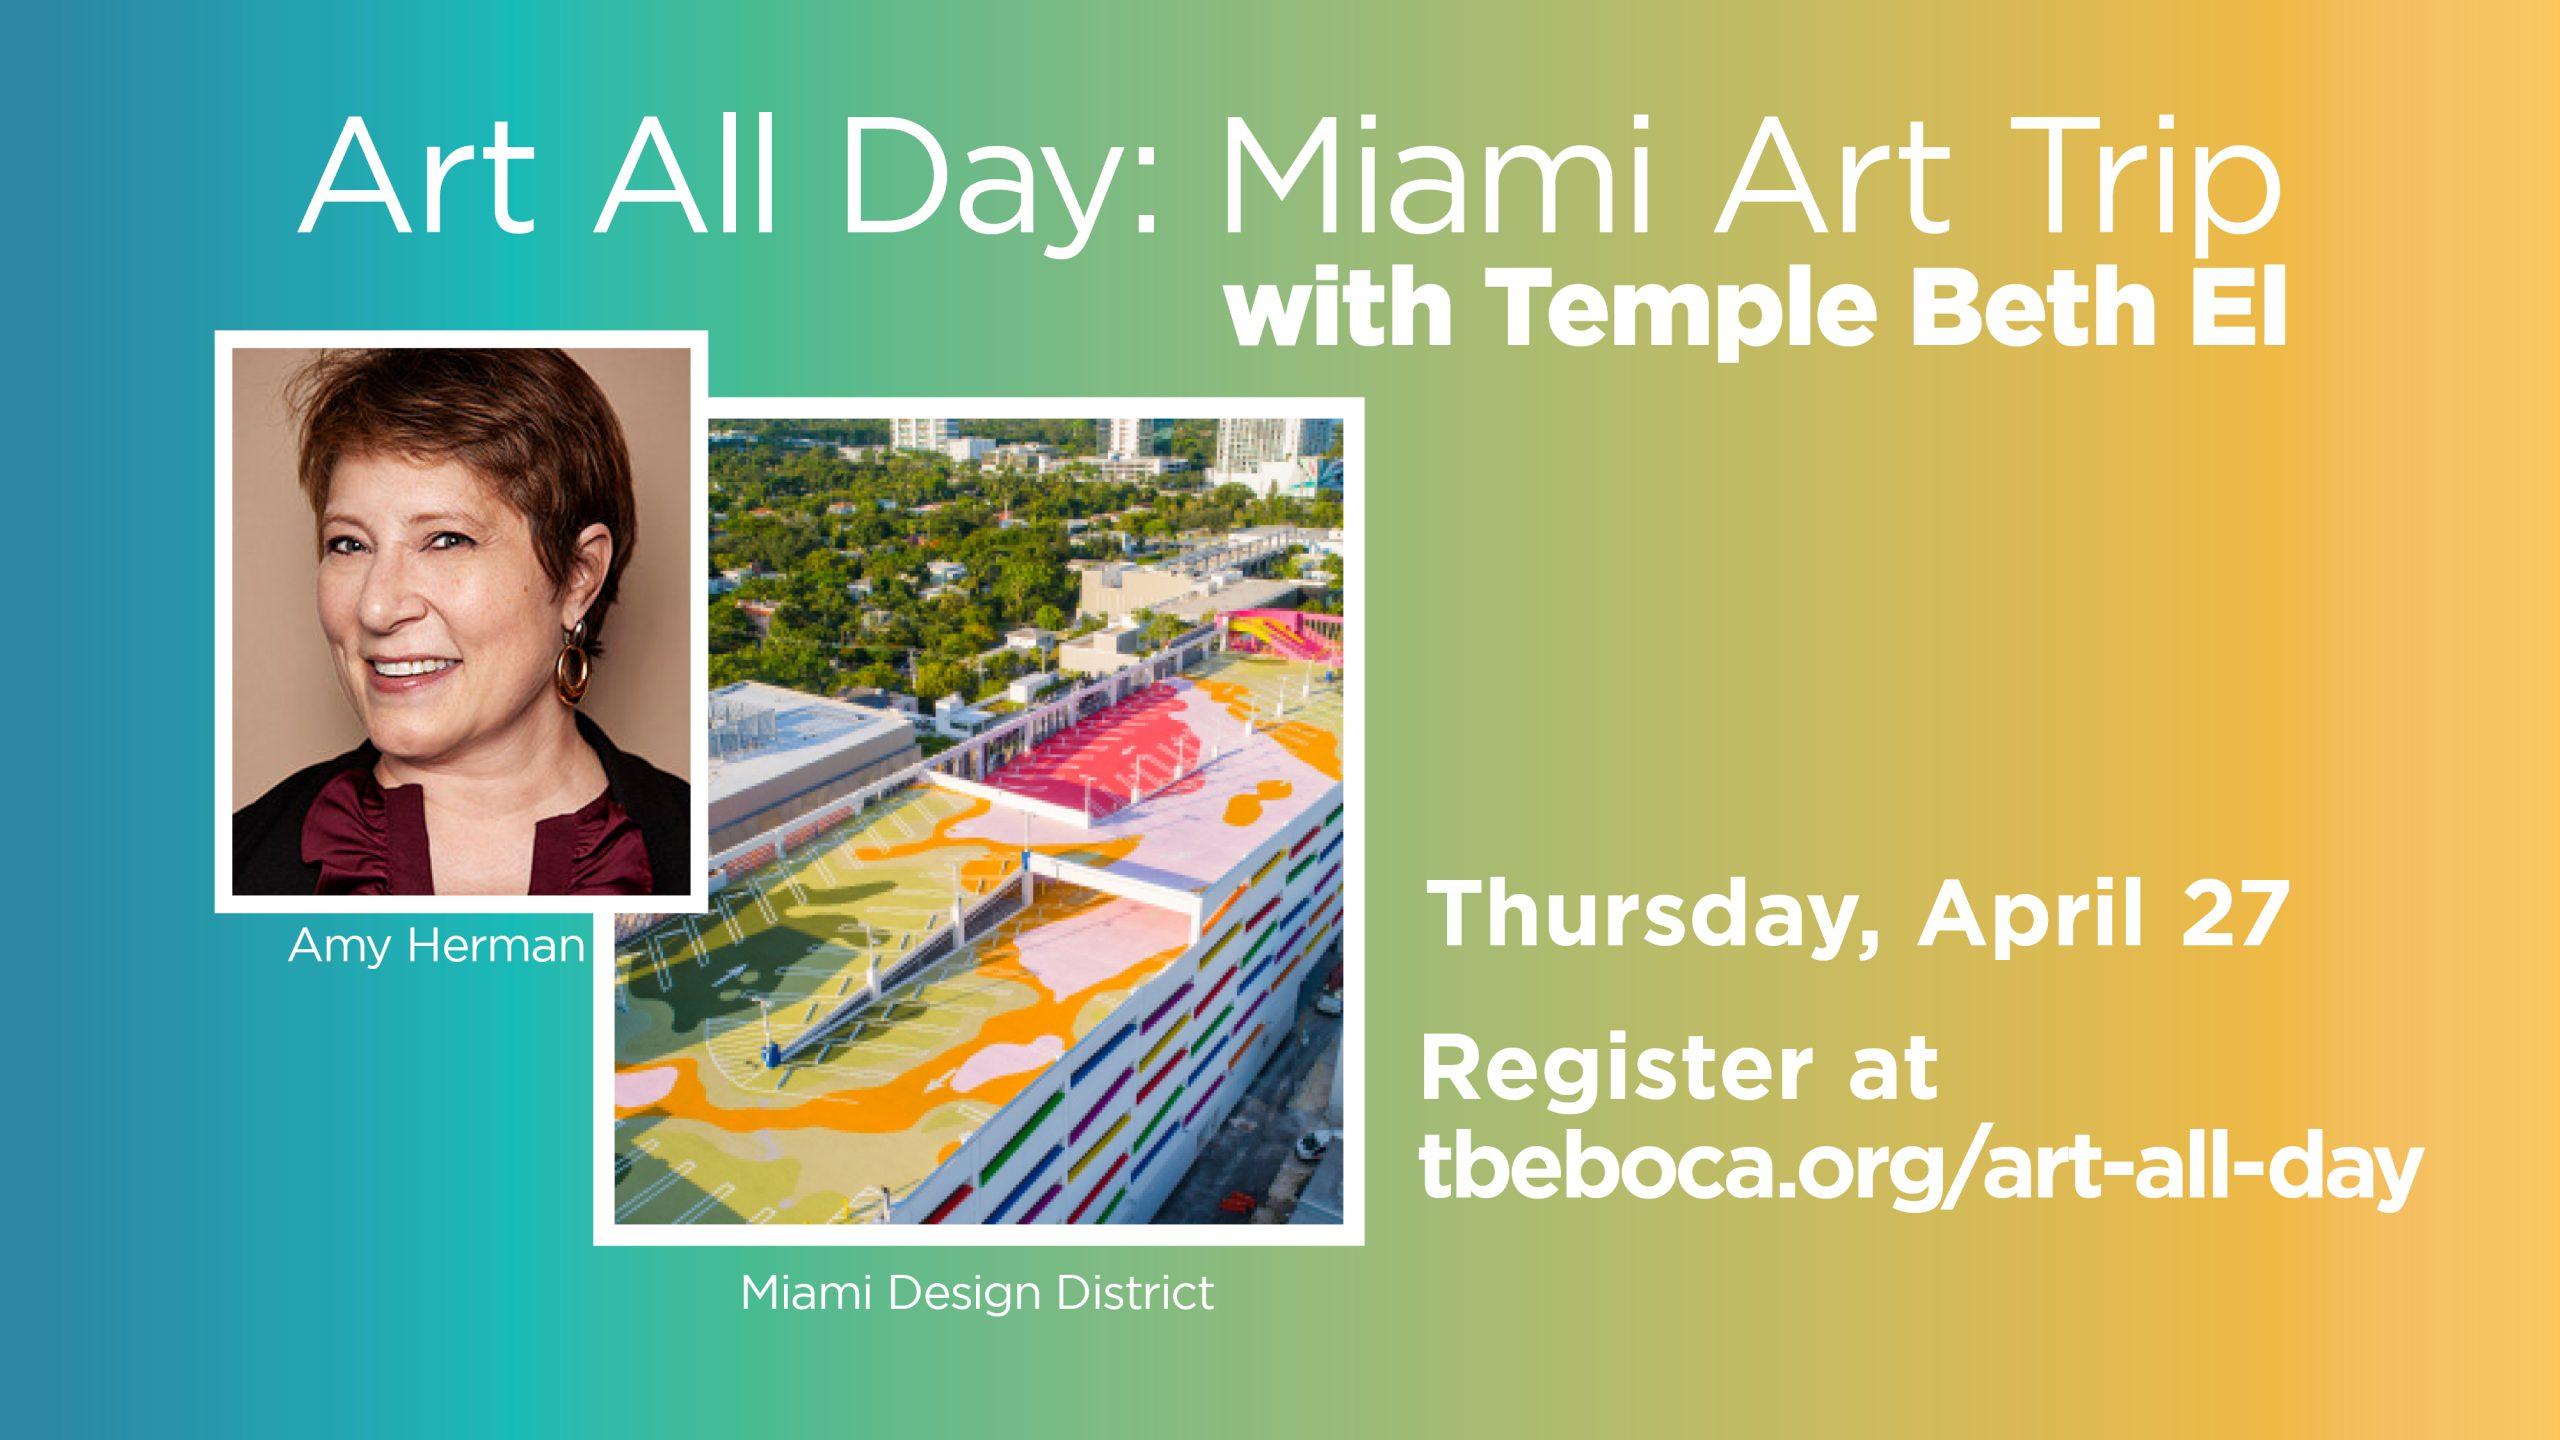 Art all Day: Miami Art Trip event graphic for Temple Beth El of Boca Raton